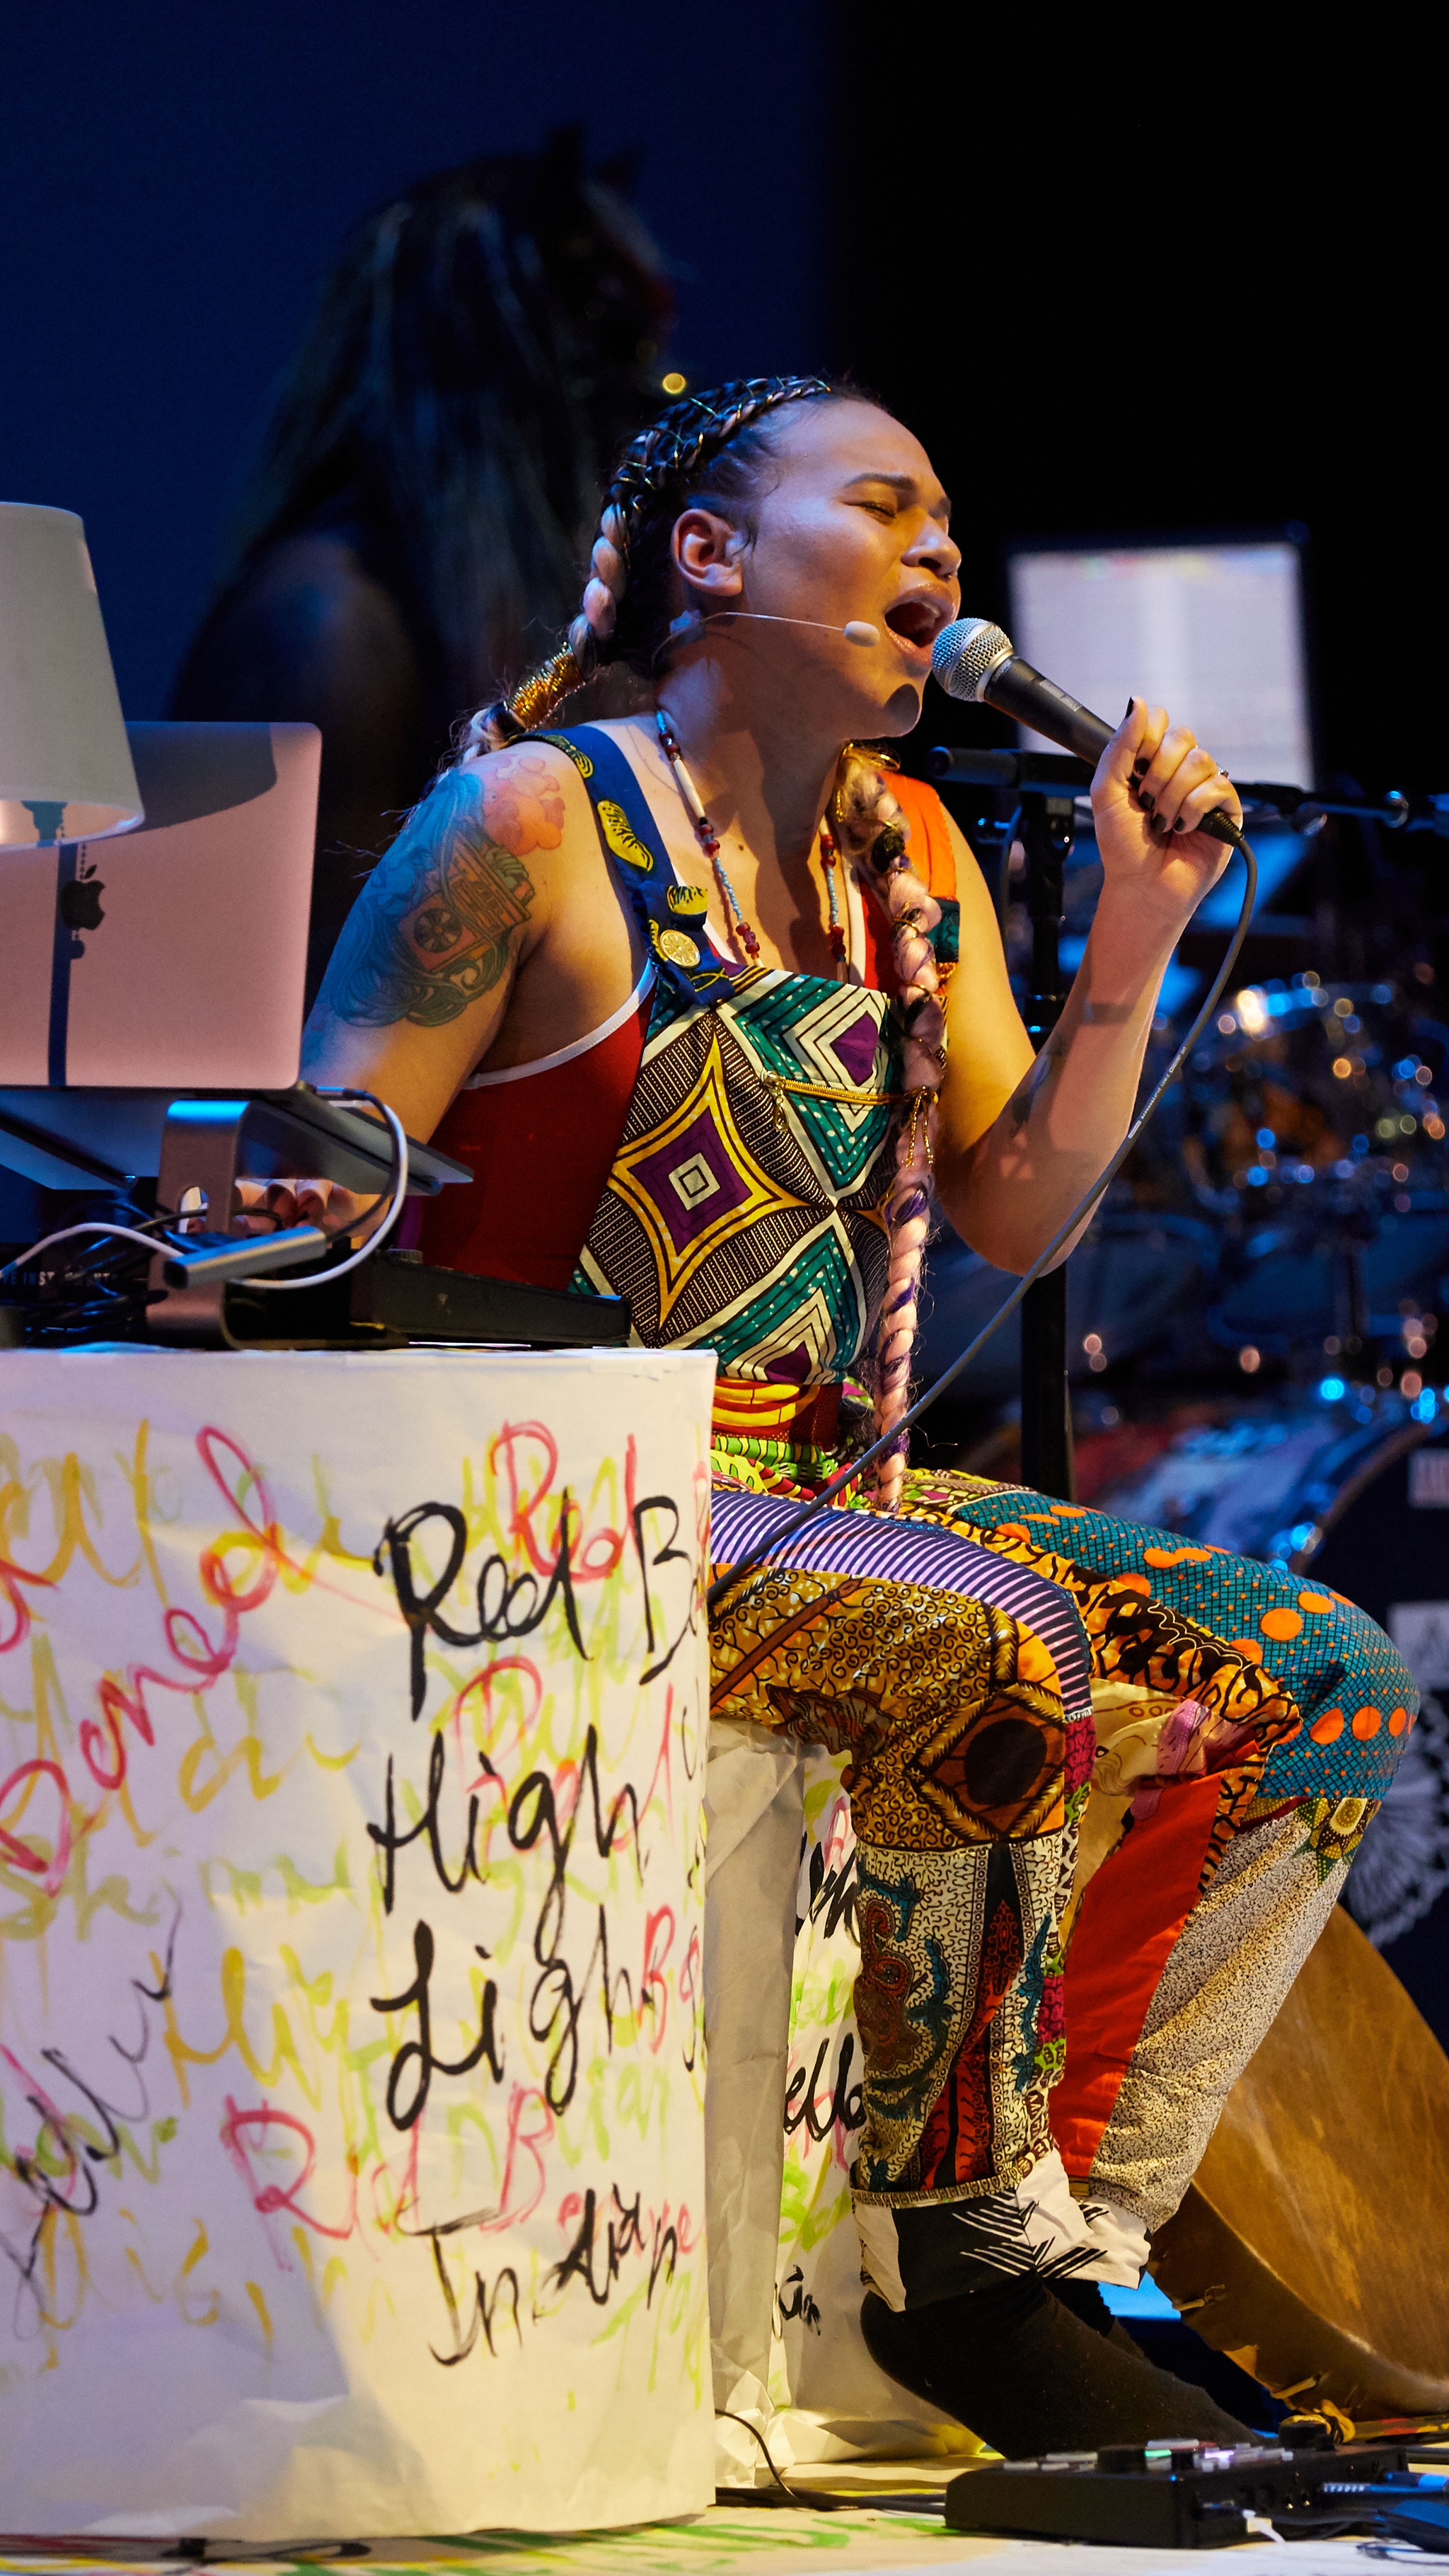 Kelsey Pyro singing while playing electronic instruments.